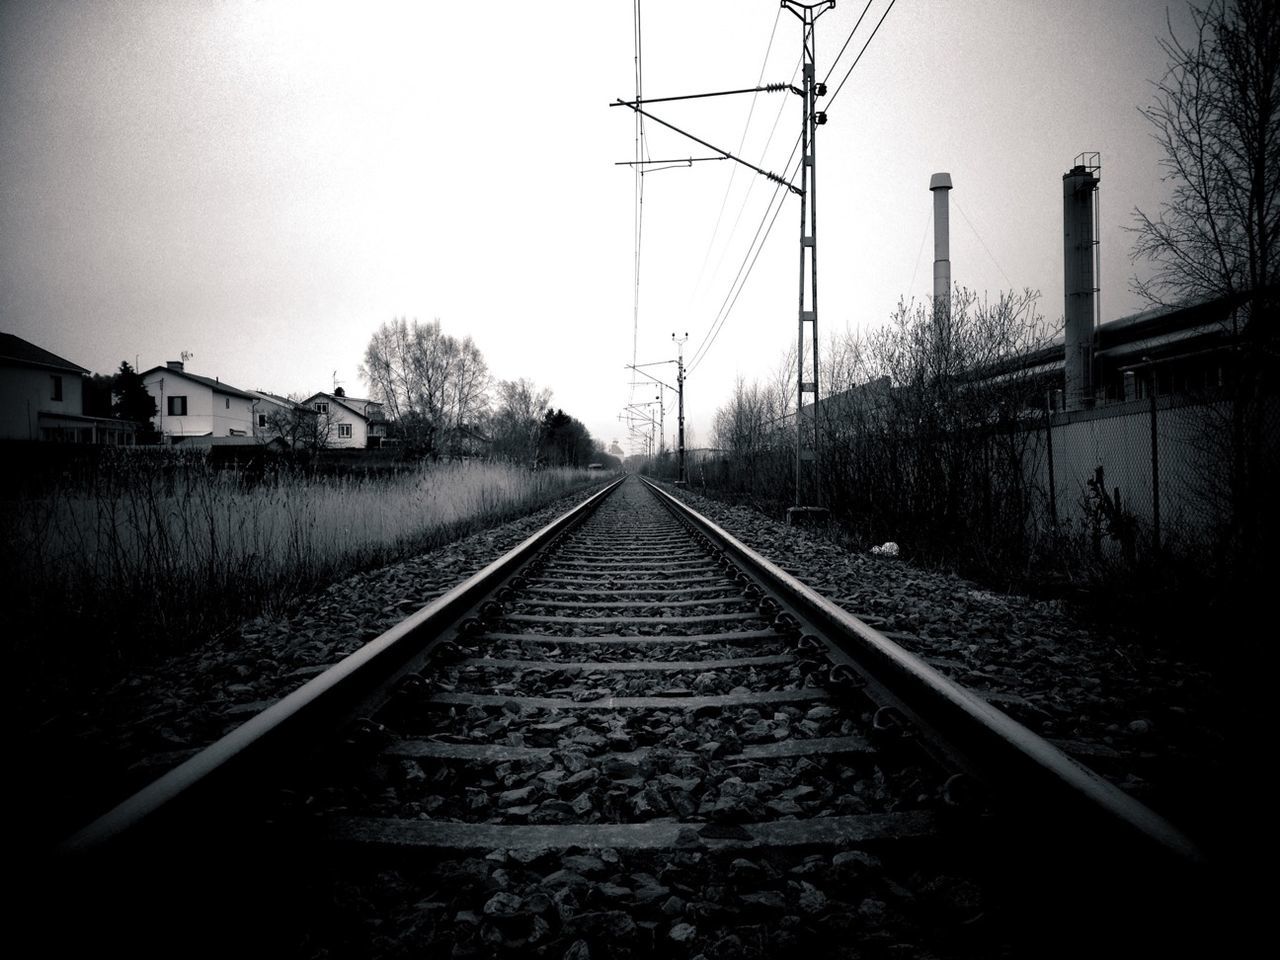 View along railroad tracks